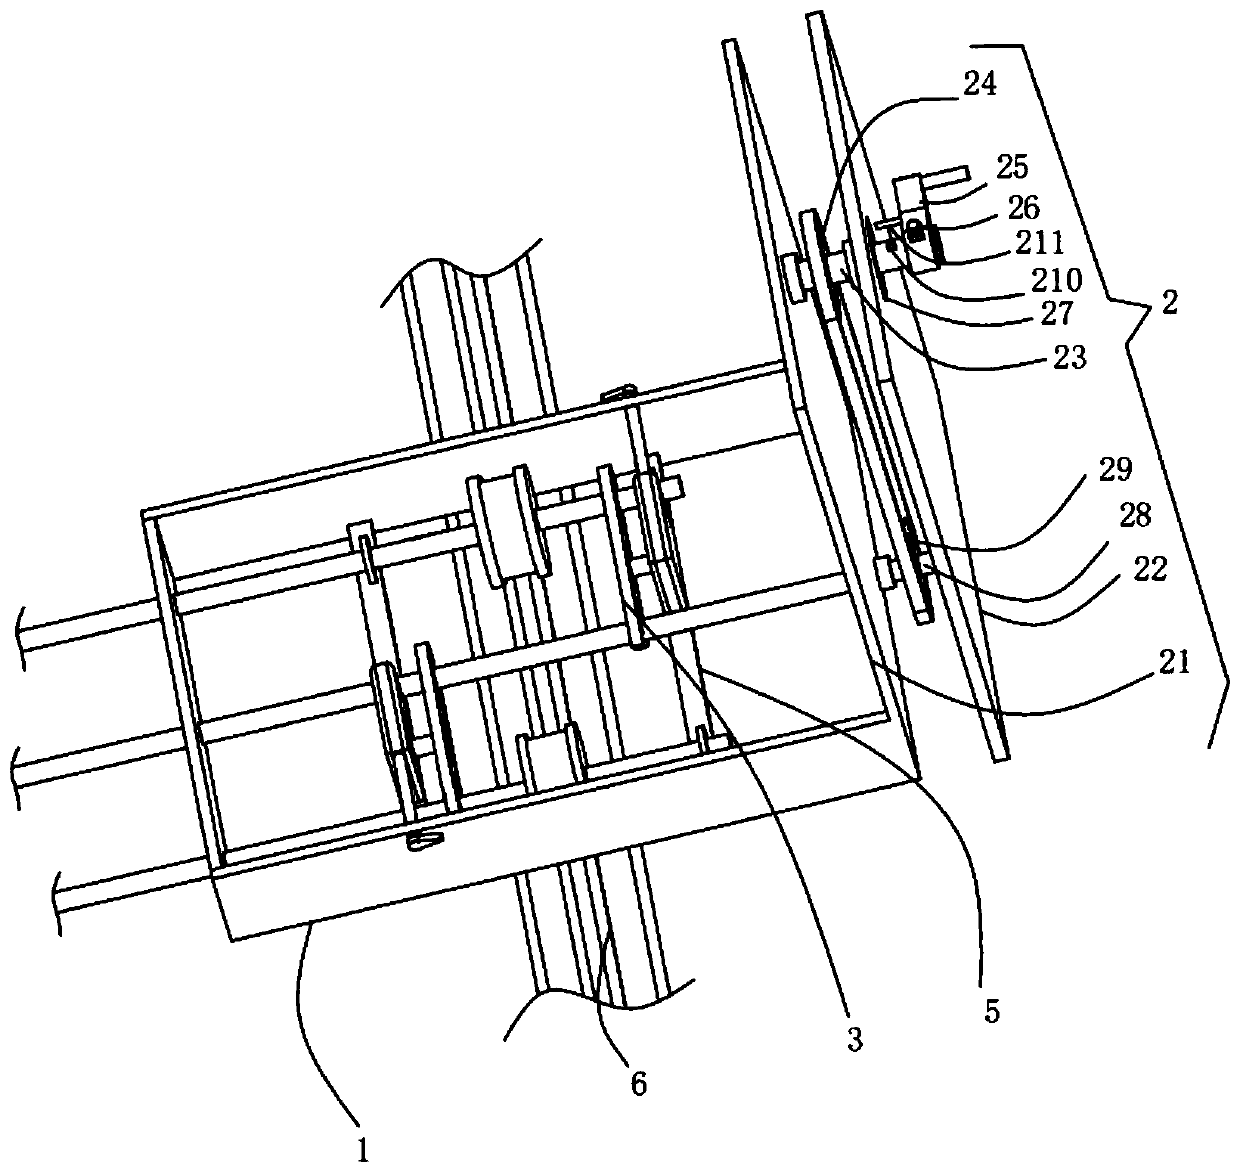 Transmission mechanism of compact shelf